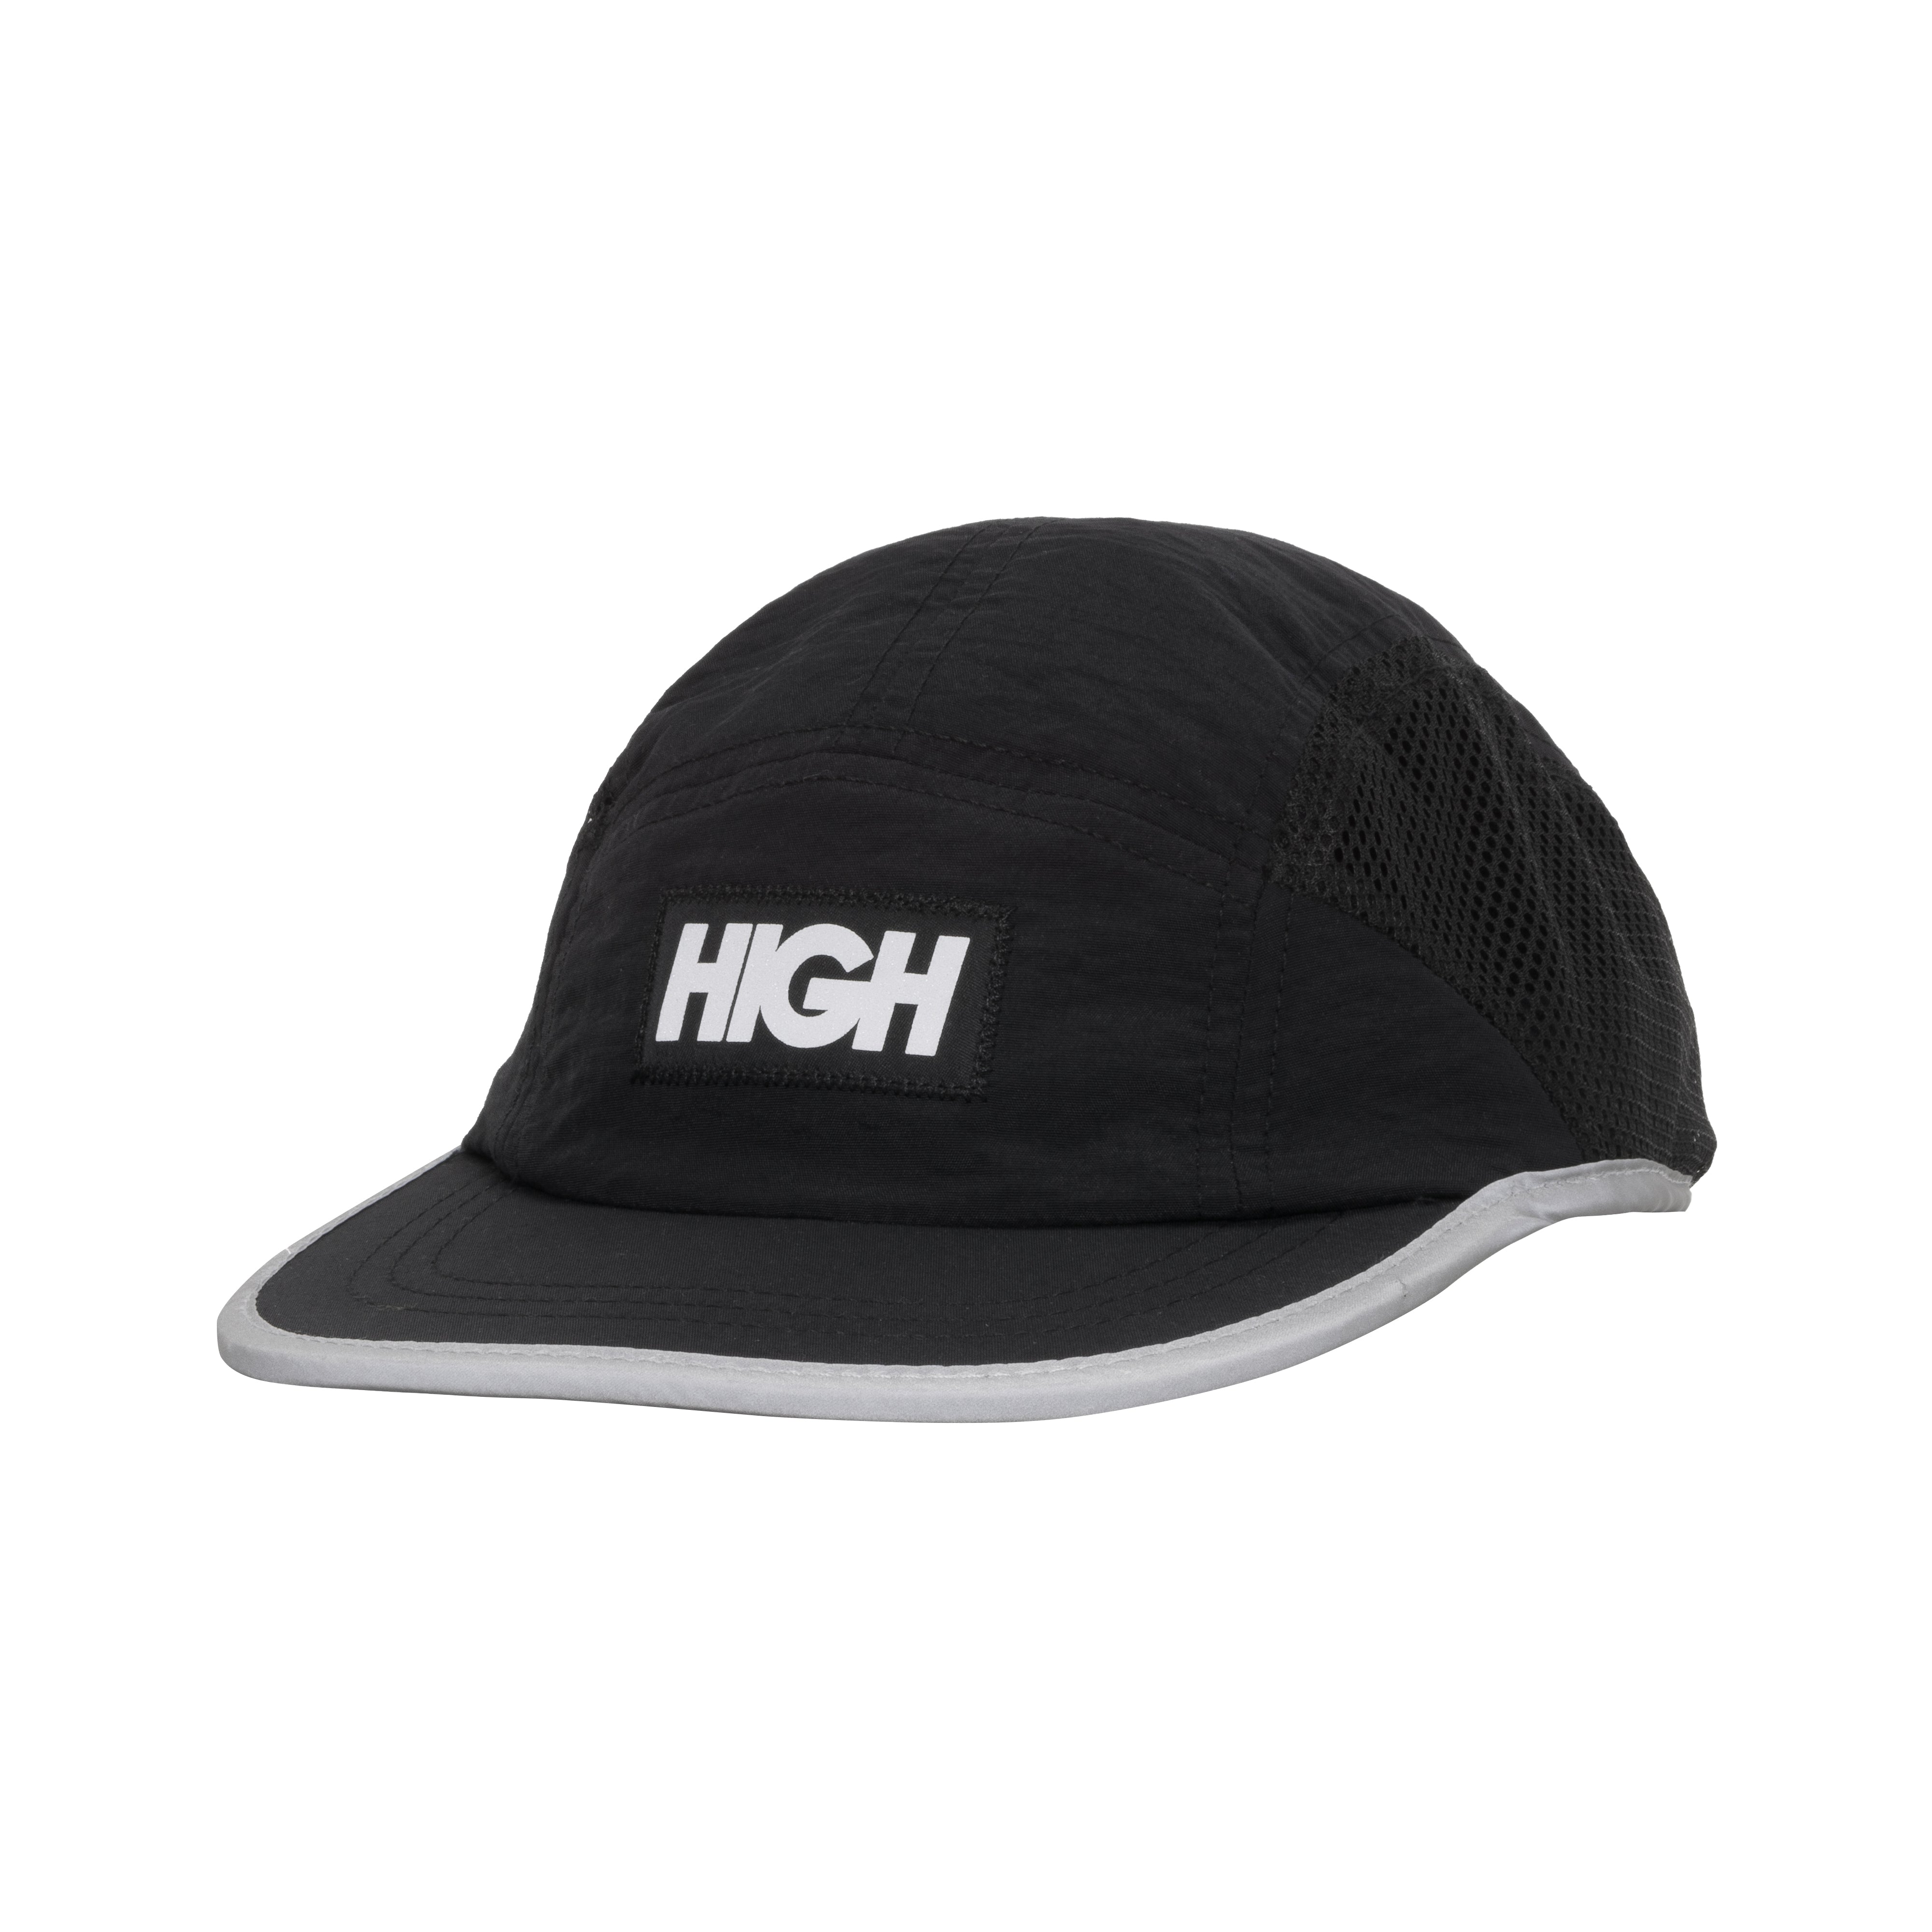 HIGH - 5 Panel Combat Reflective Black